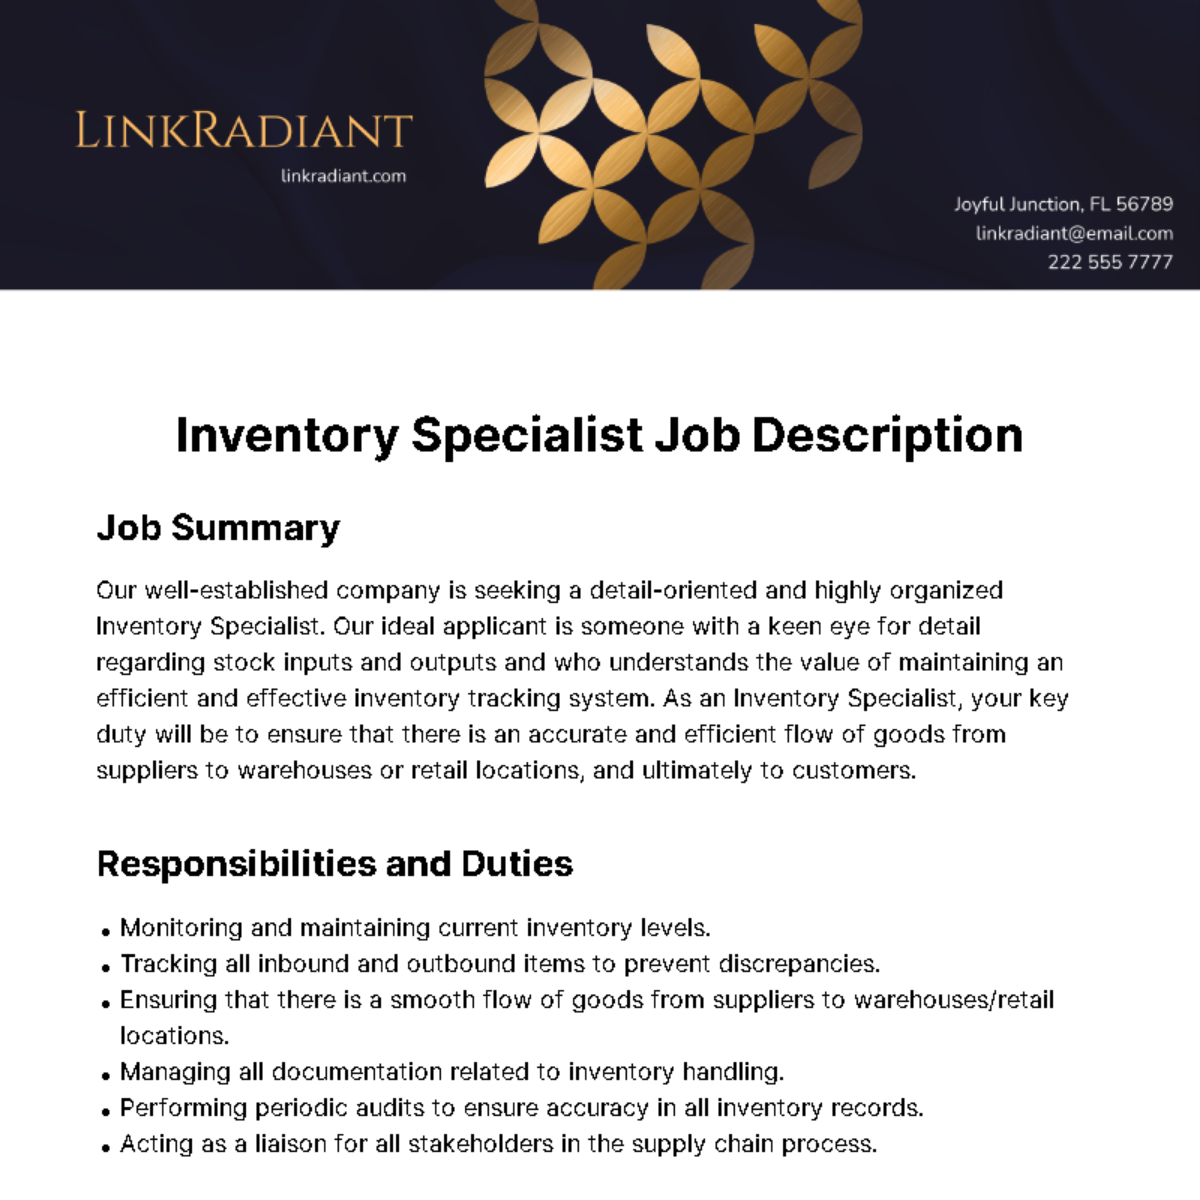 Inventory Specialist Job Description Template